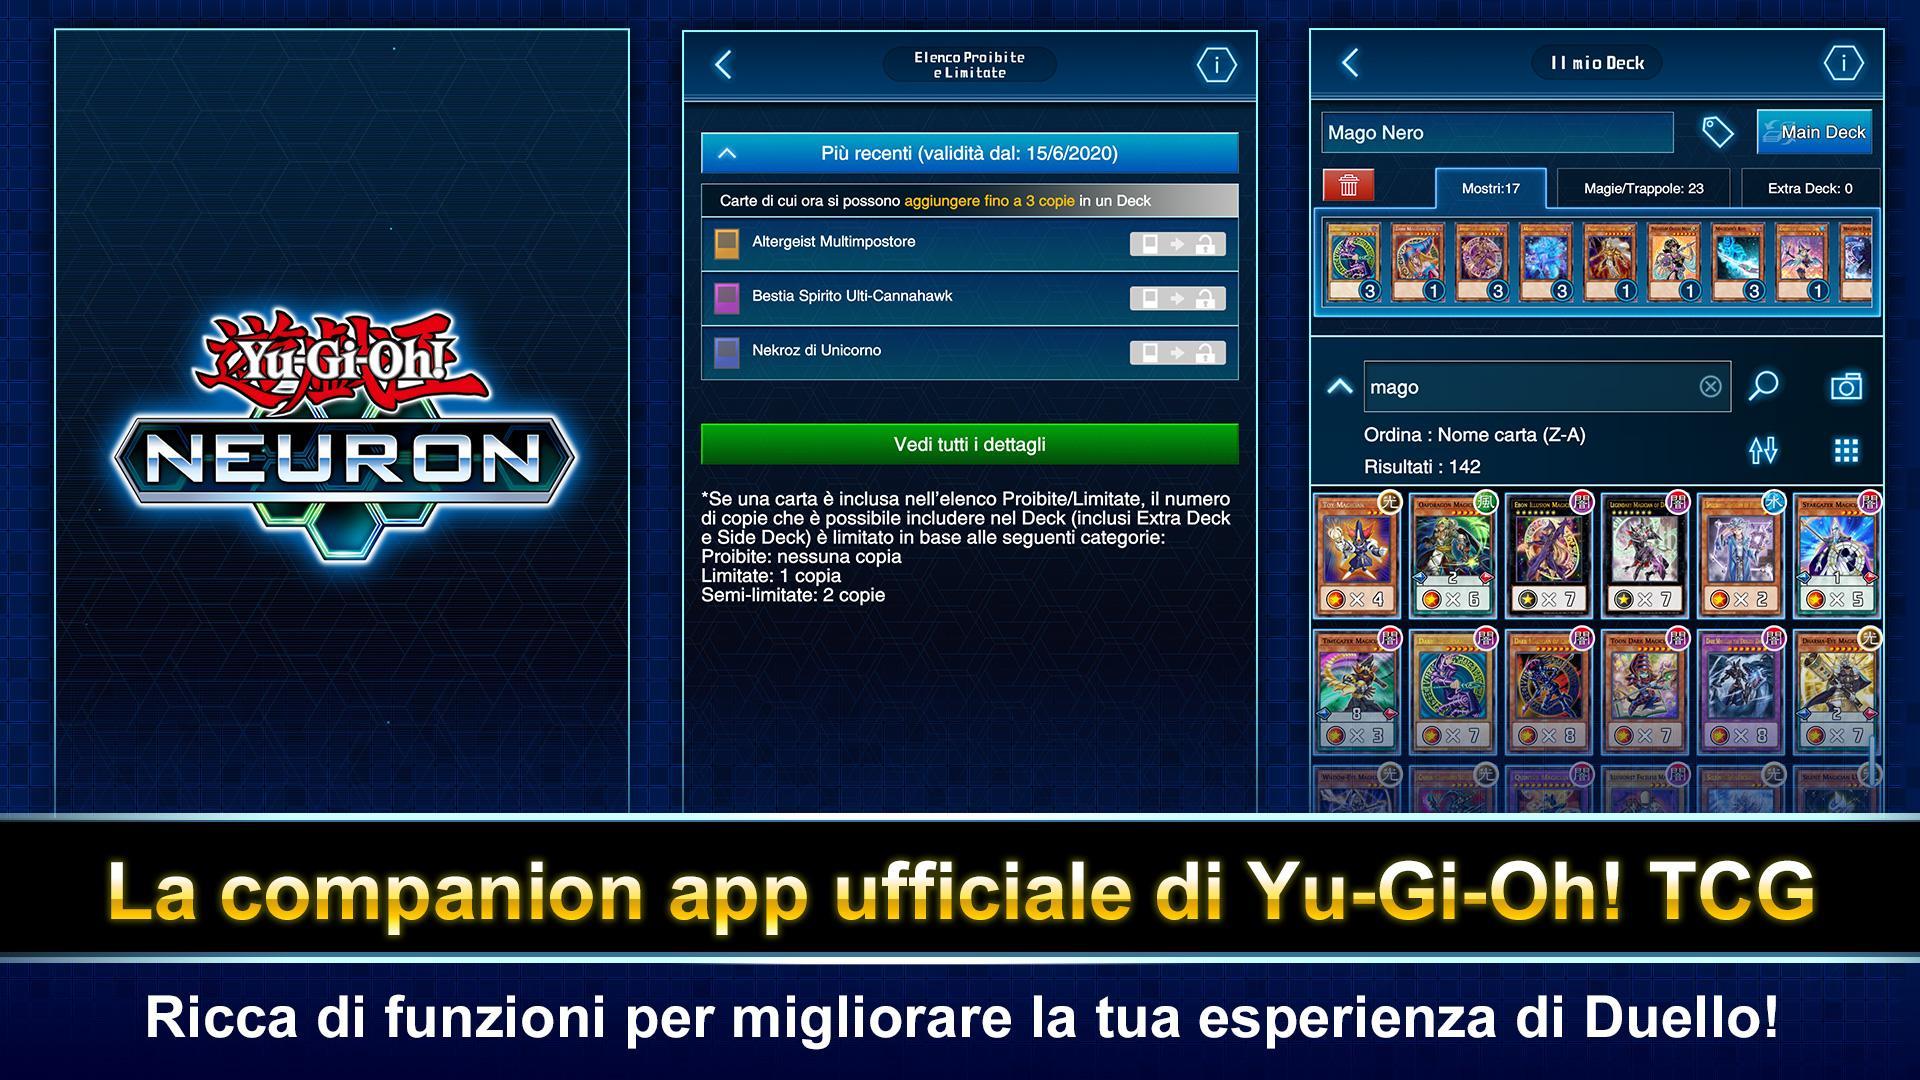 Screenshot 1 of Yu-Gi-Oh! Neuron 3.14.0